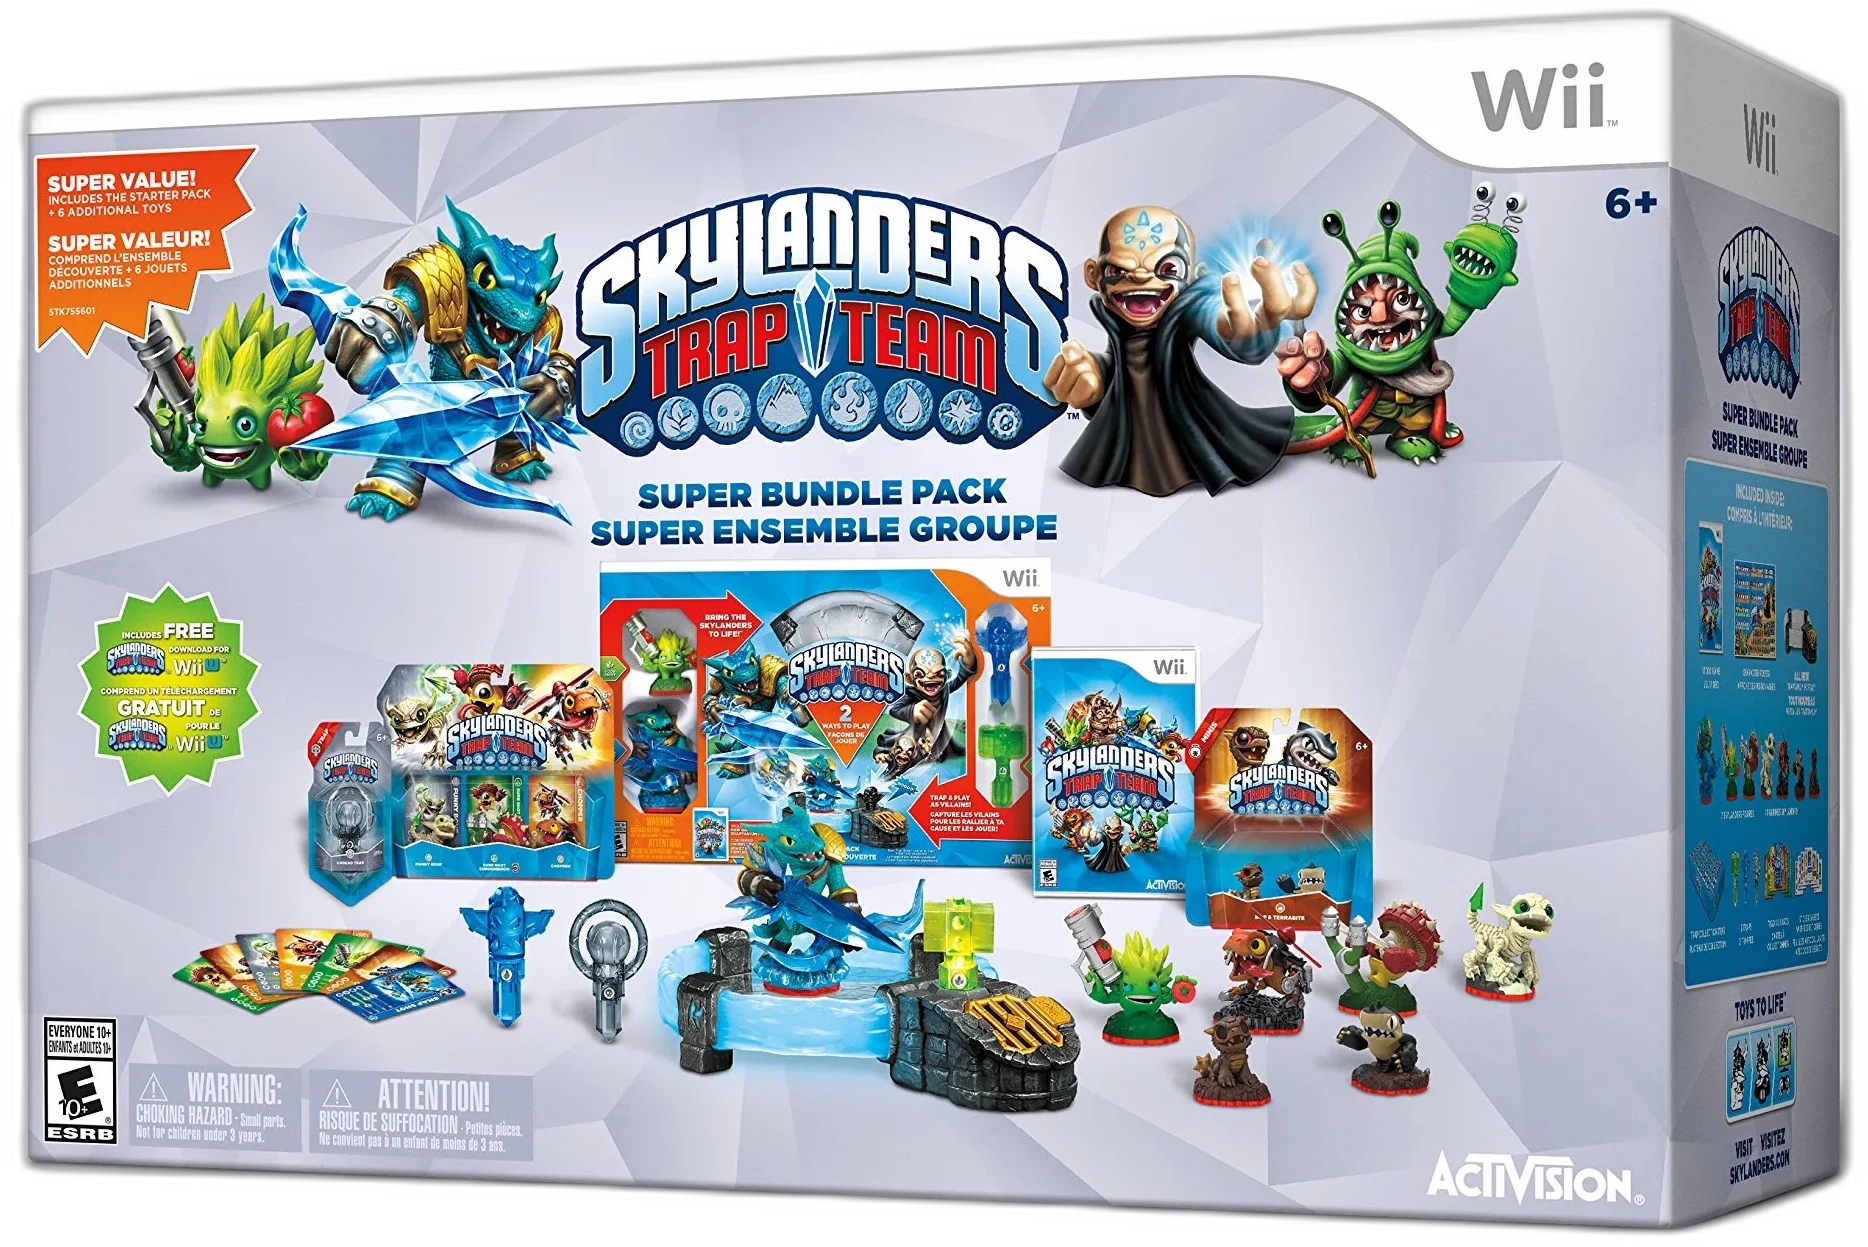  Activision Wii Skylanders Super Bundle